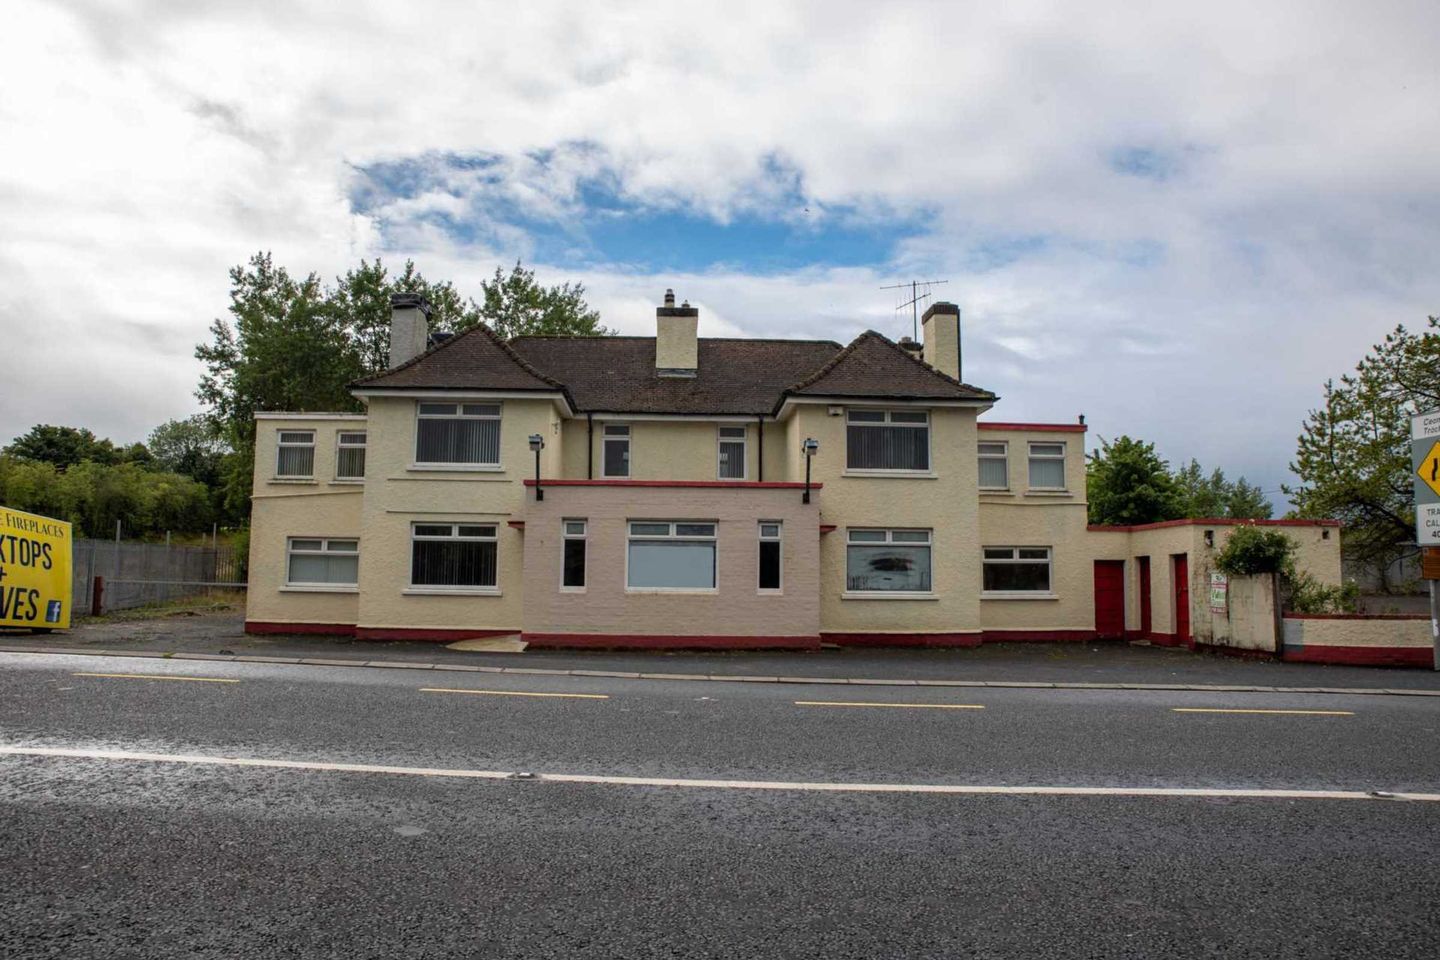 Former Customs House, Bridgend, Co. Donegal